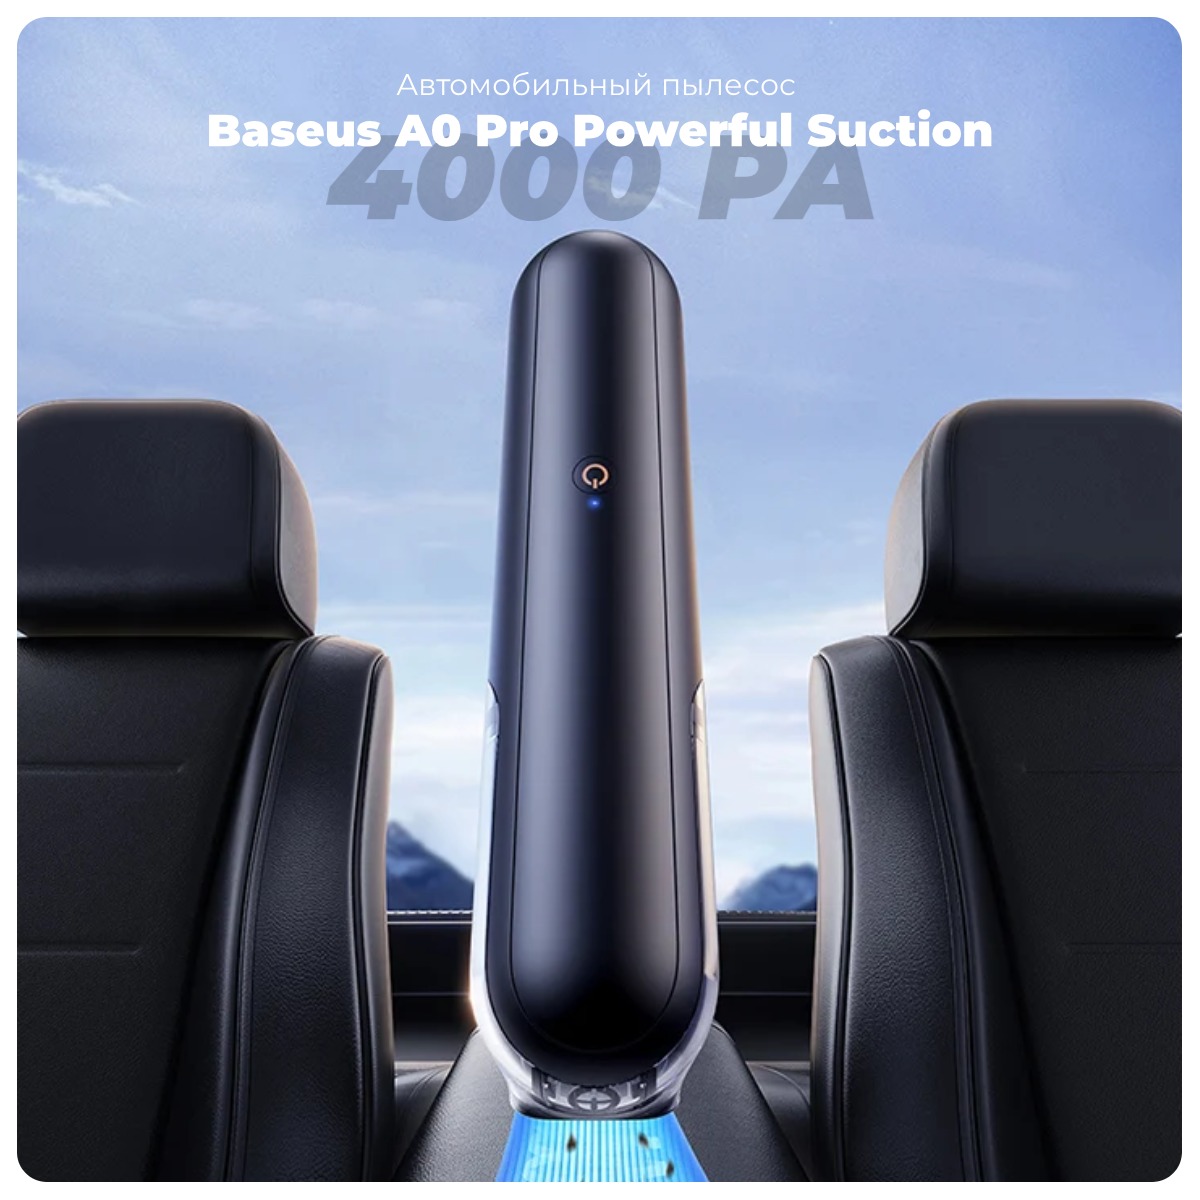 Baseus-A0-Pro-Powerful-Suction-01